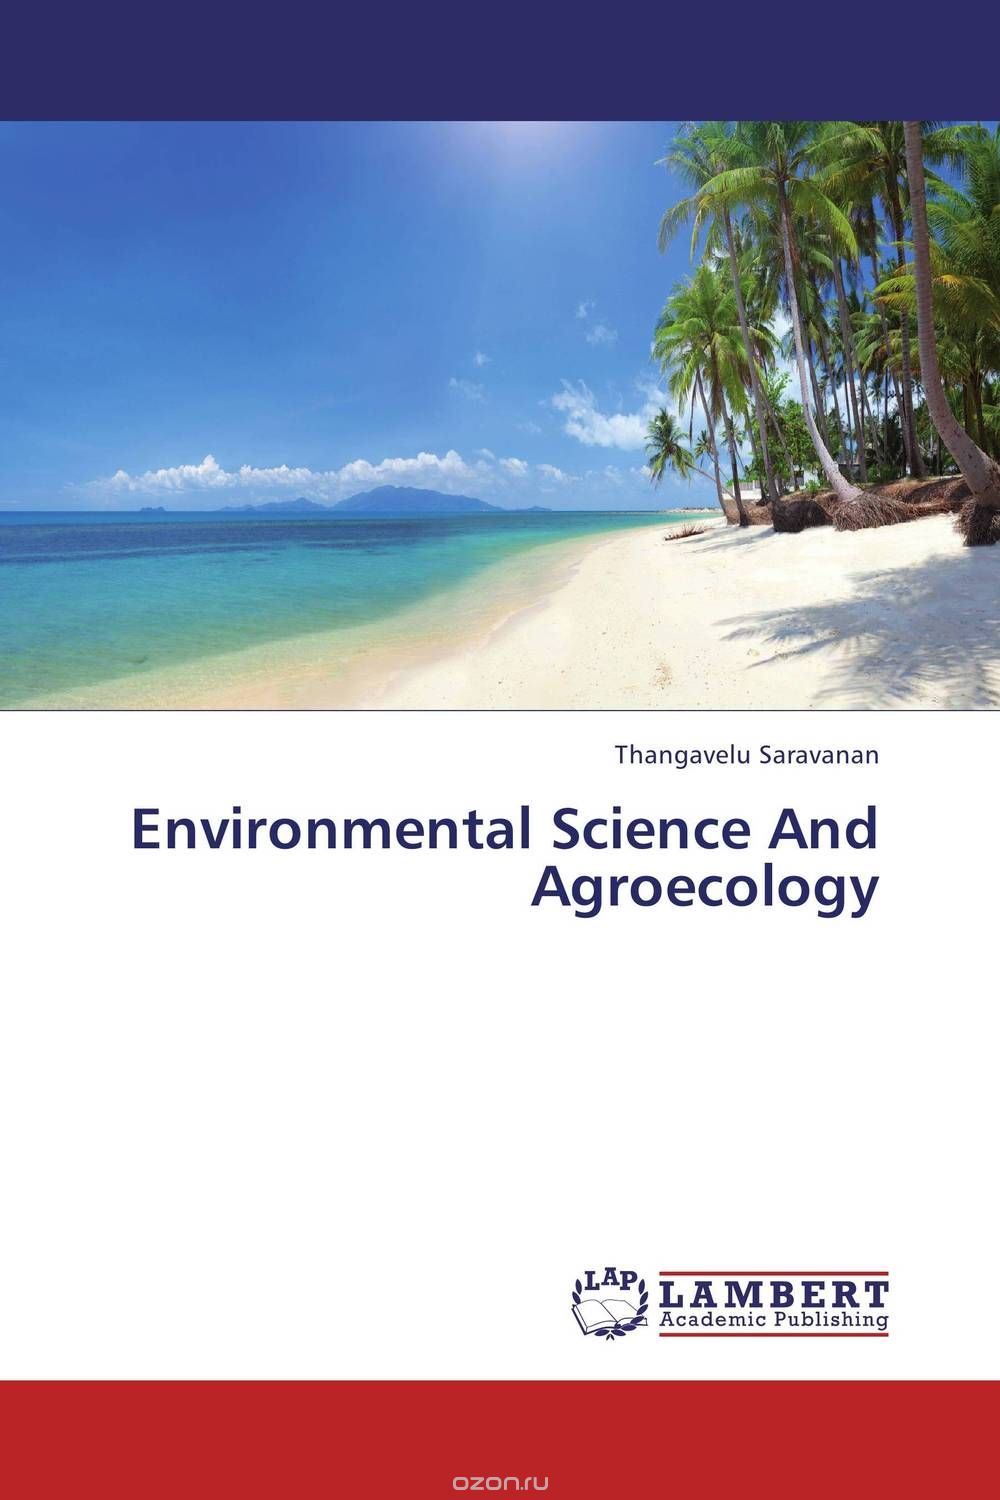 Скачать книгу "Environmental Science And Agroecology"